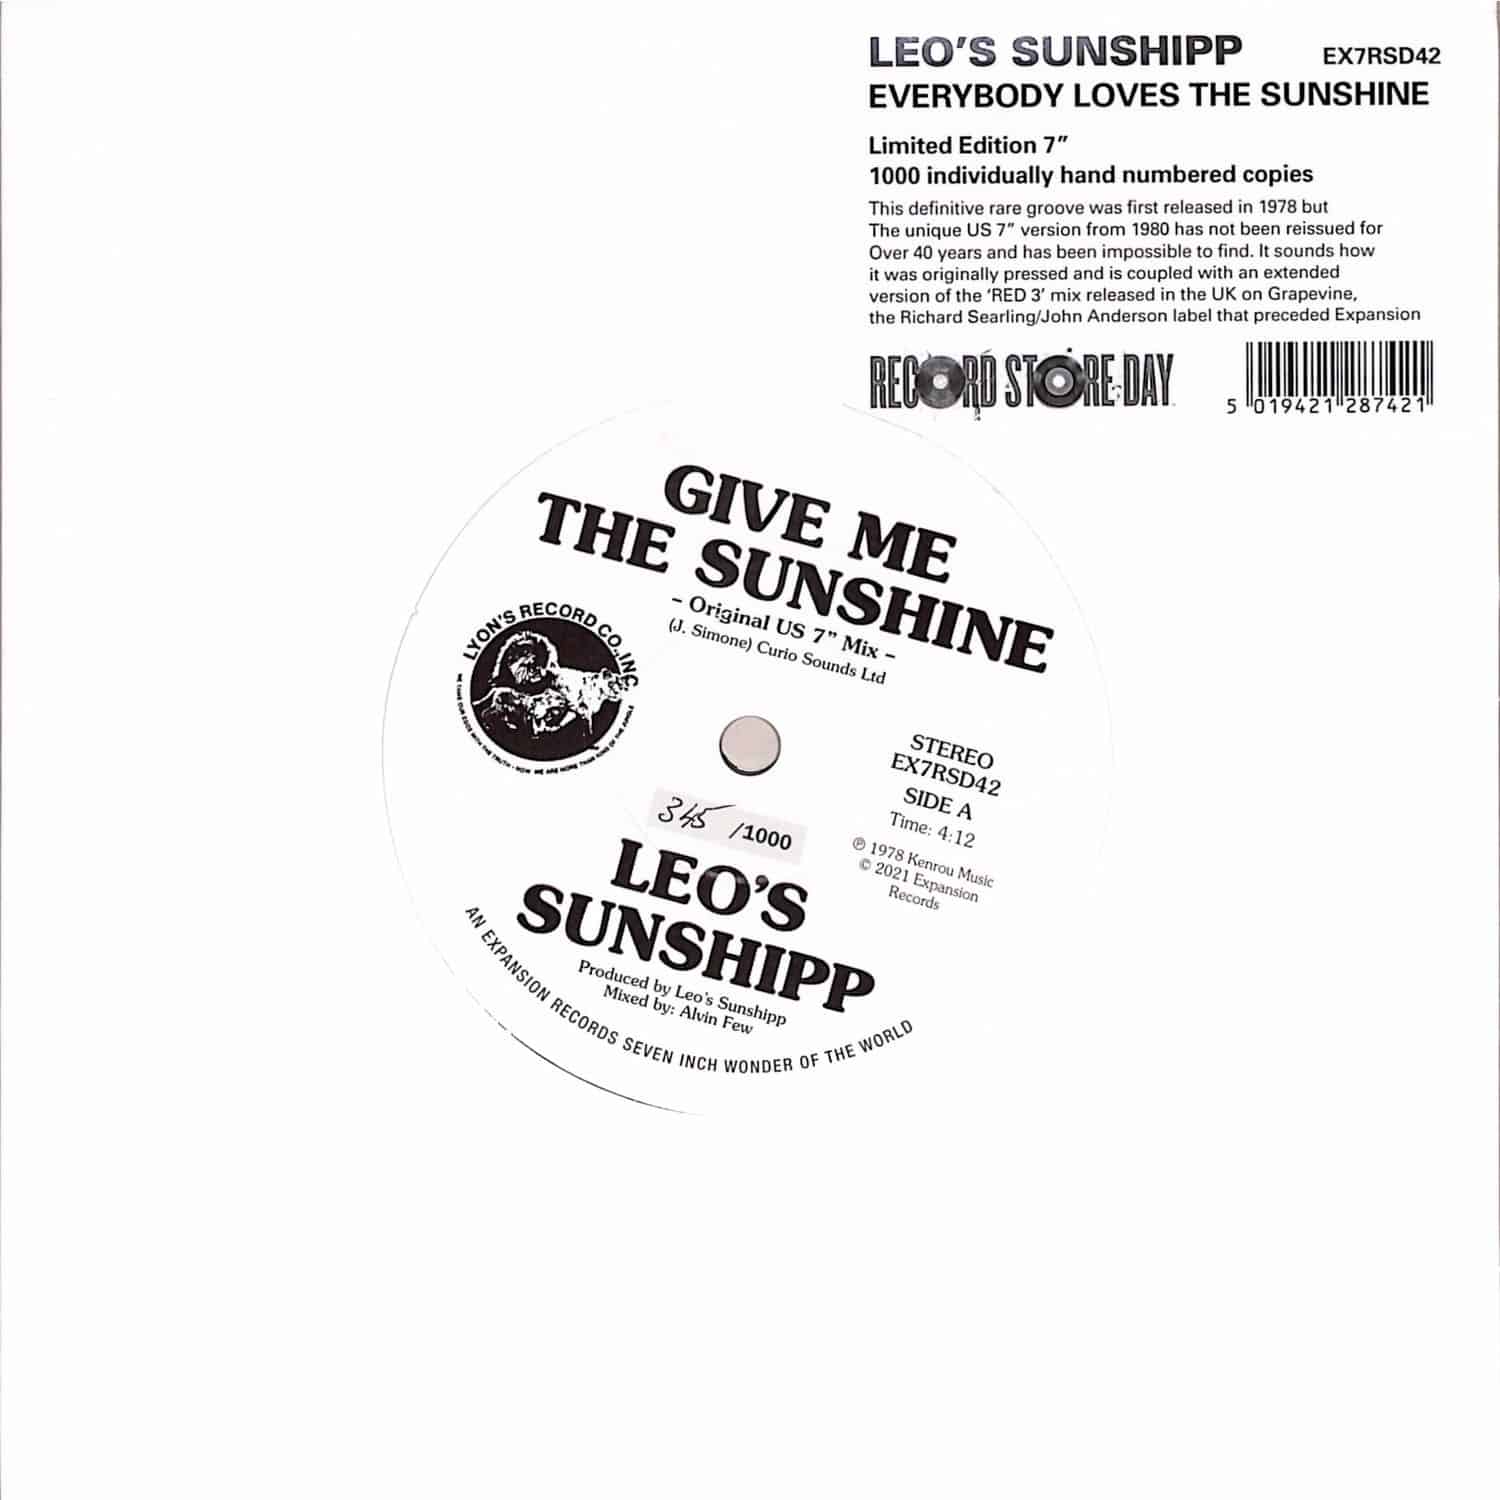 Leos Sunshipp - GIVE ME THE SUNSHINE 